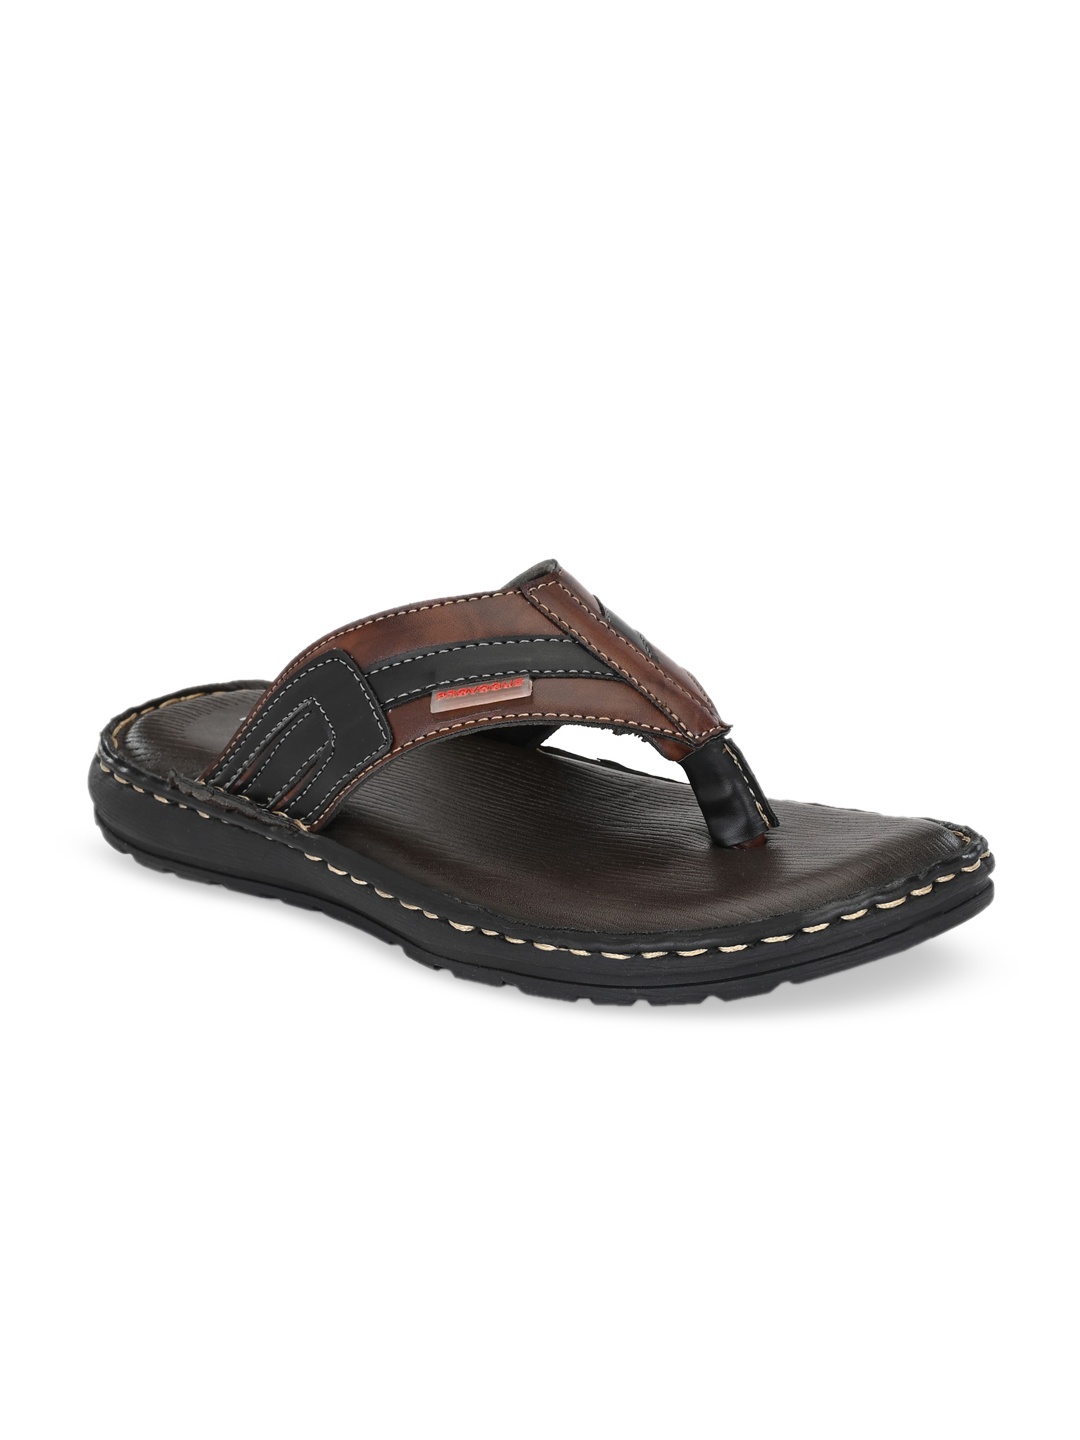 

Provogue Men Brown Leather Comfort Sandals